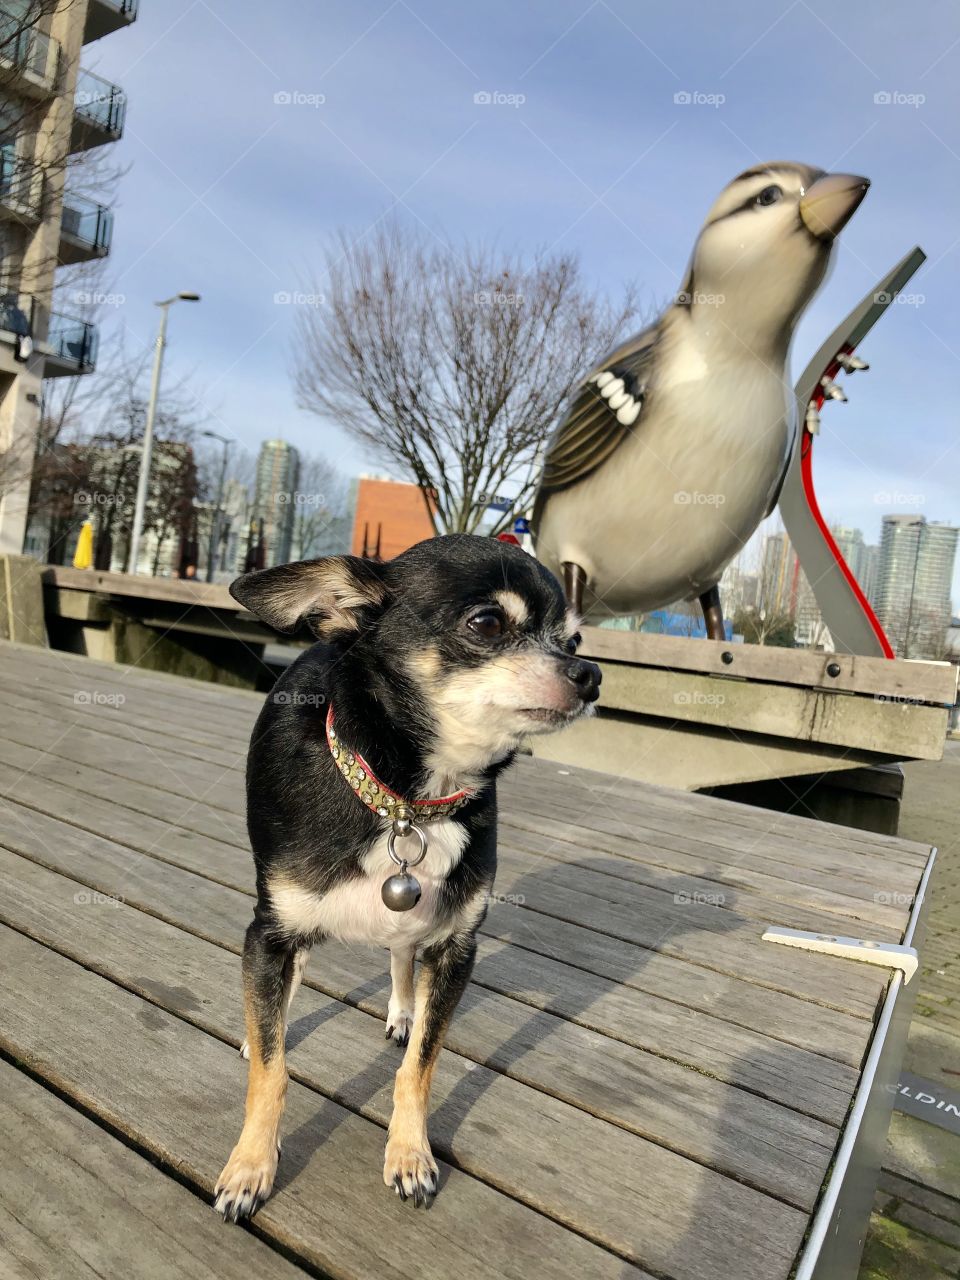 Bird and Dog Together 